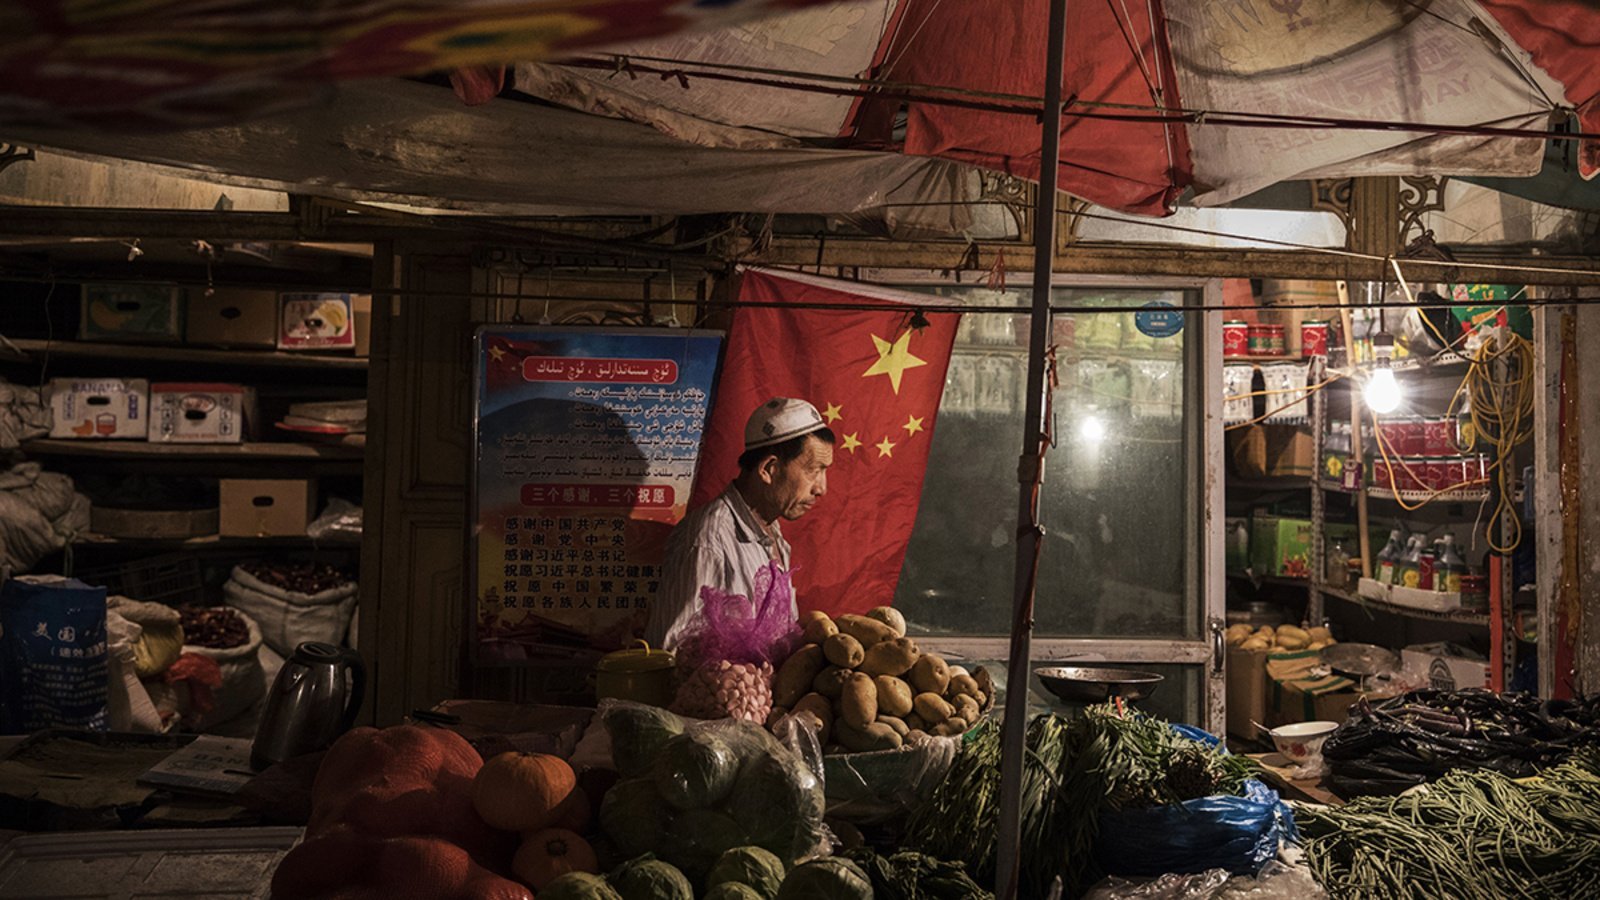 China’s Repression of Uyghurs in Xinjiang